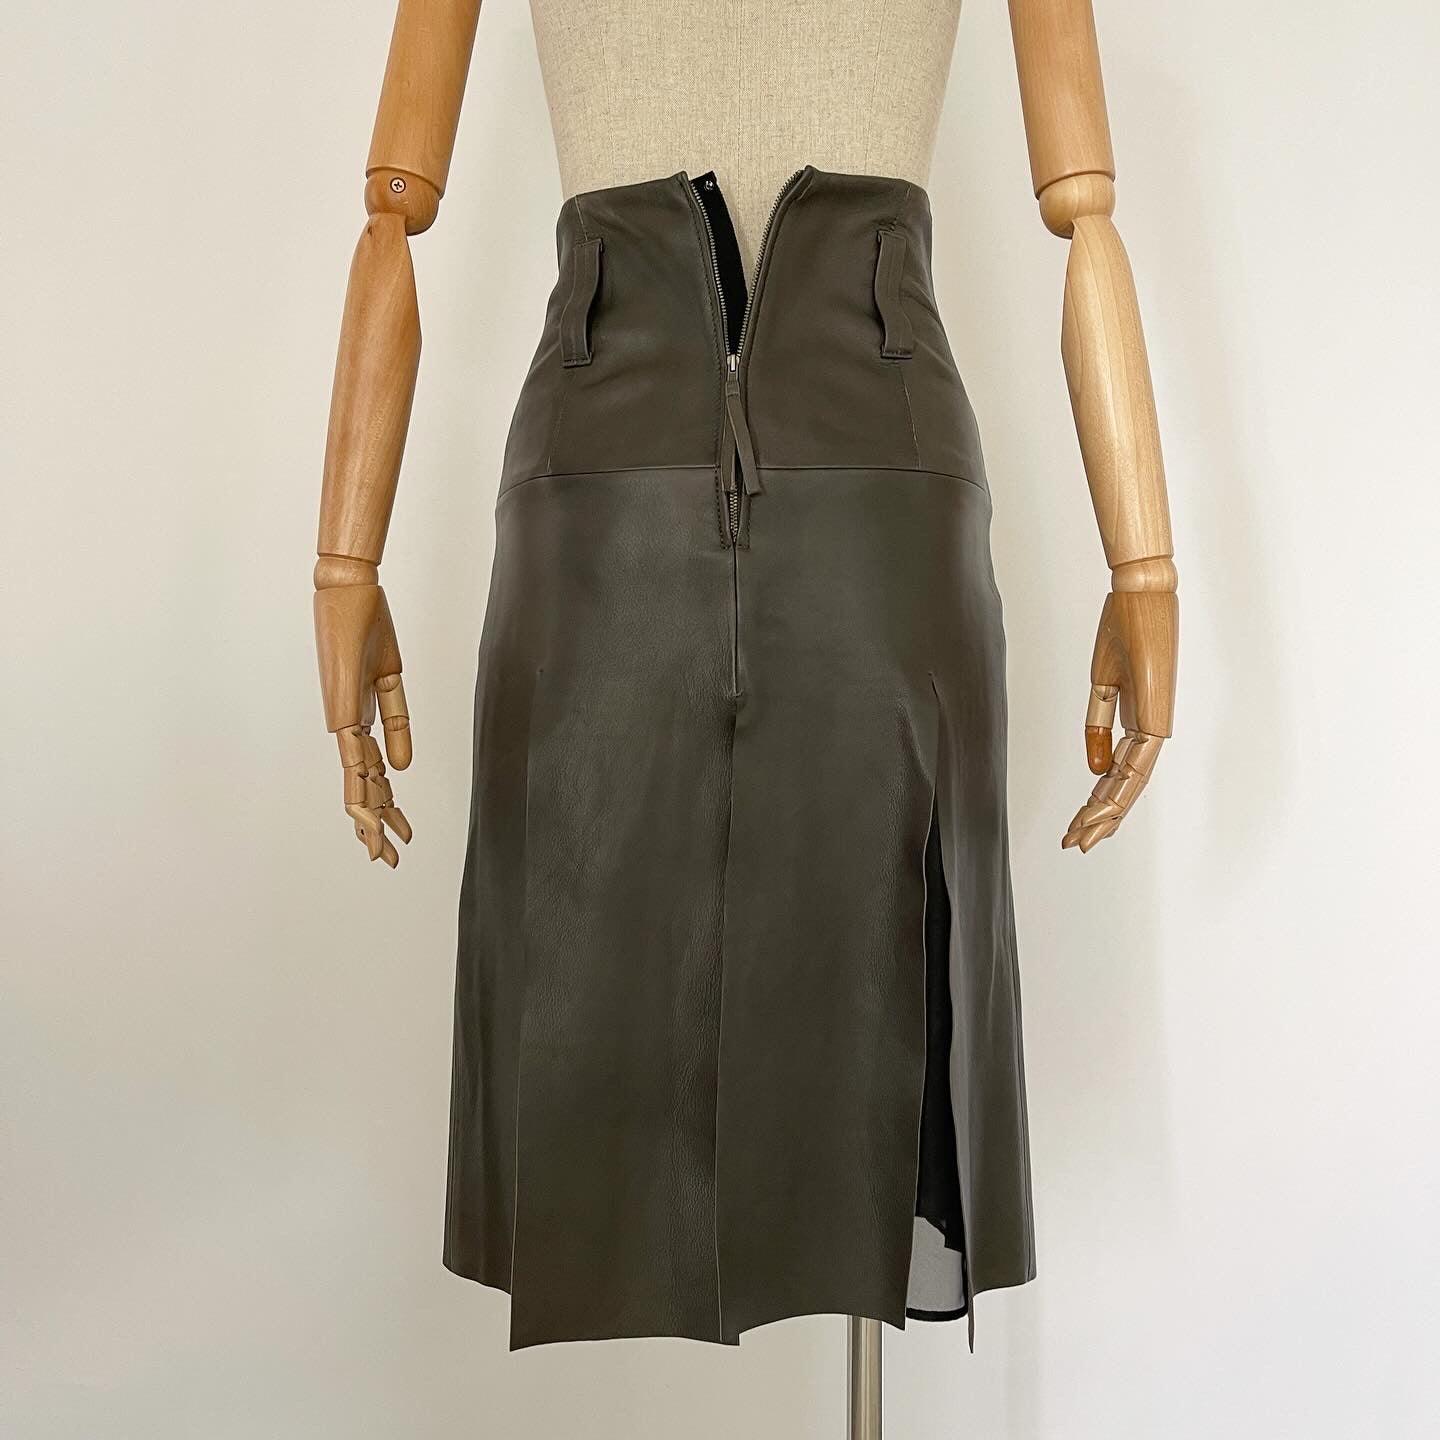 DOROTHEE SCHUMACHER - DOROTHEE SCHUMACHER Leather Skirt - AVVIIVVA.COM